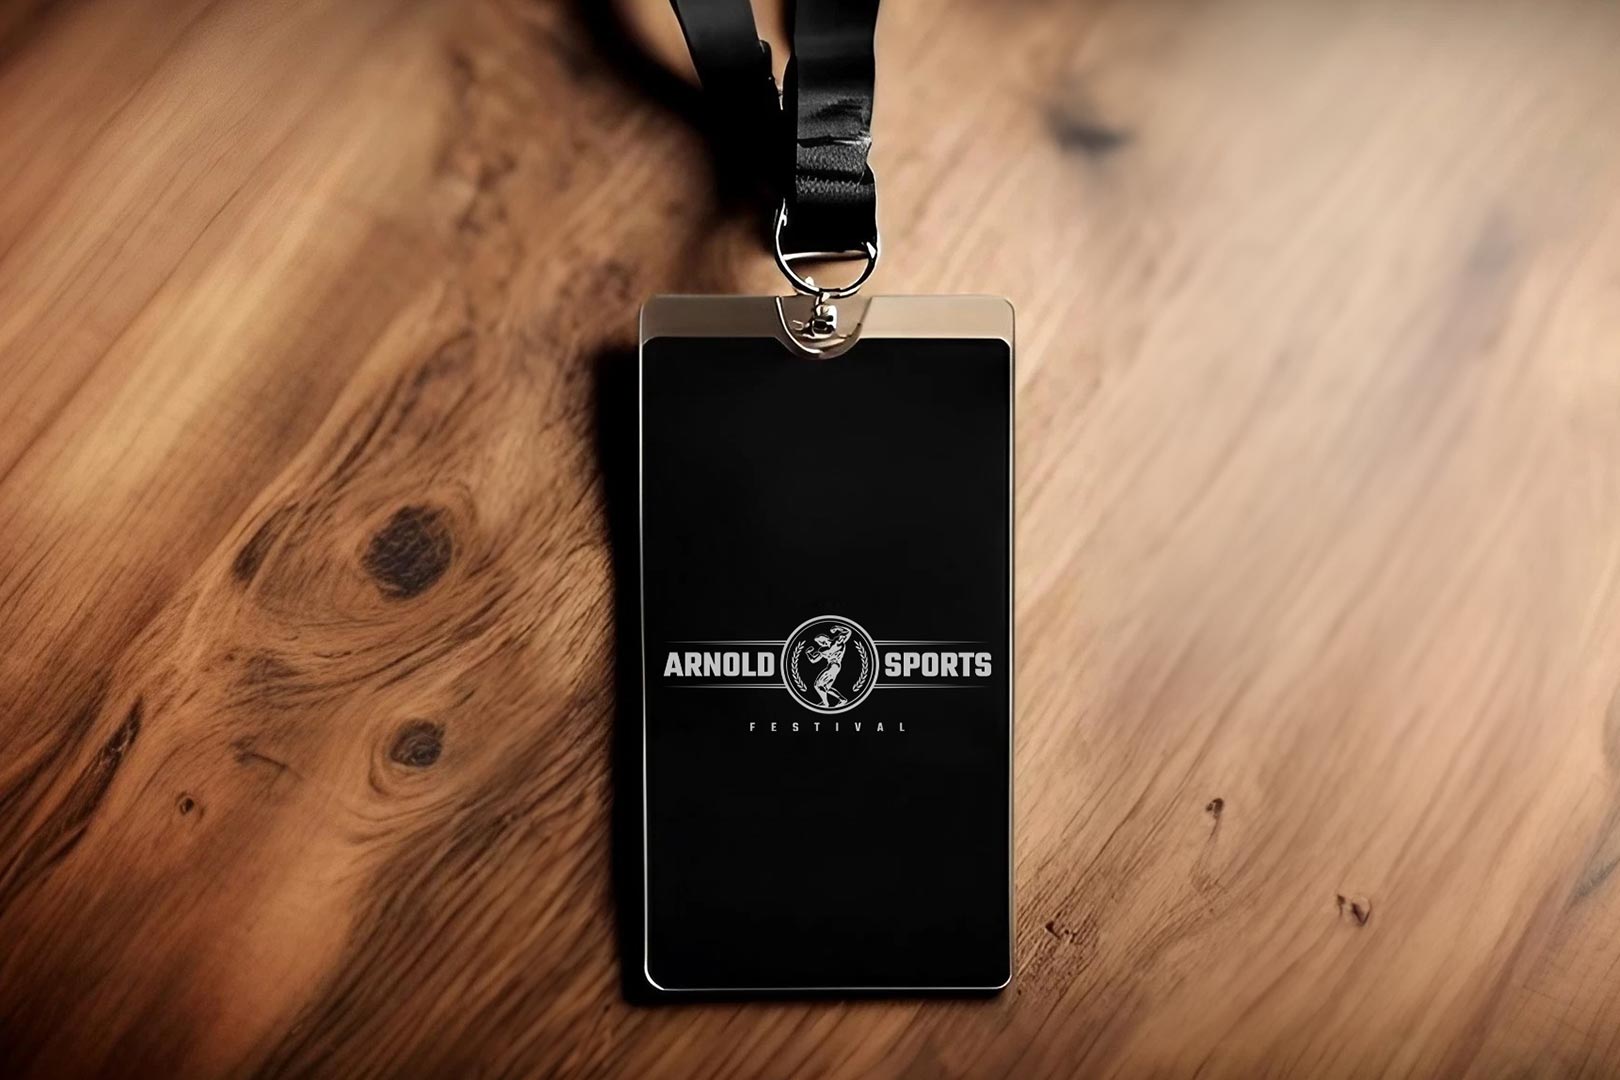 Arnold Sports Festival Executive Pass